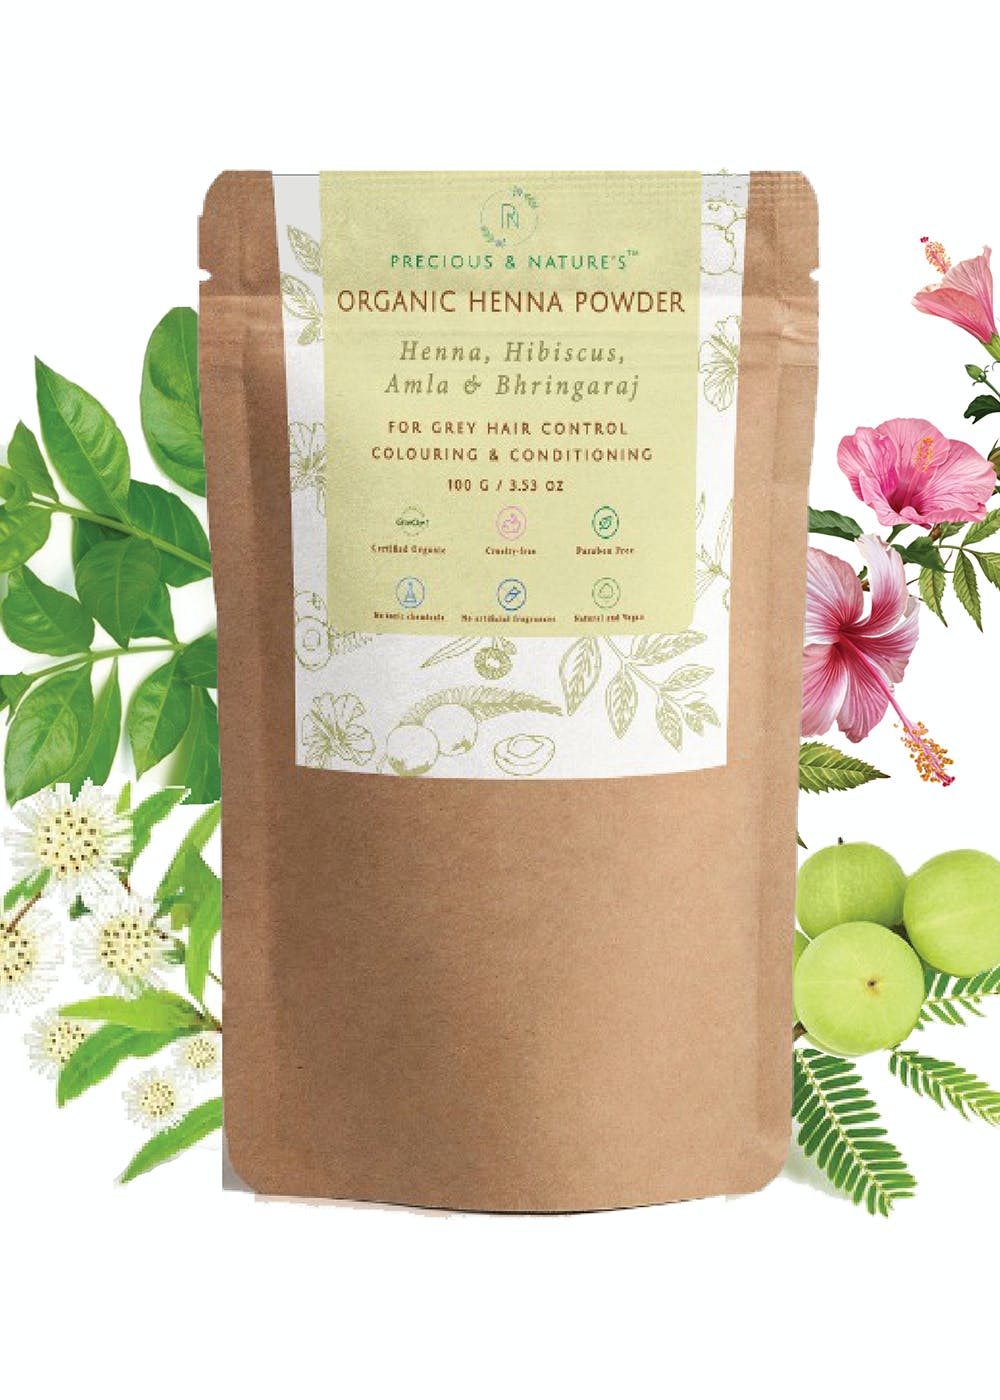 Henna, Hibiscus, Amla & Bhringaraj Certified Organic Henna Powder (200g)